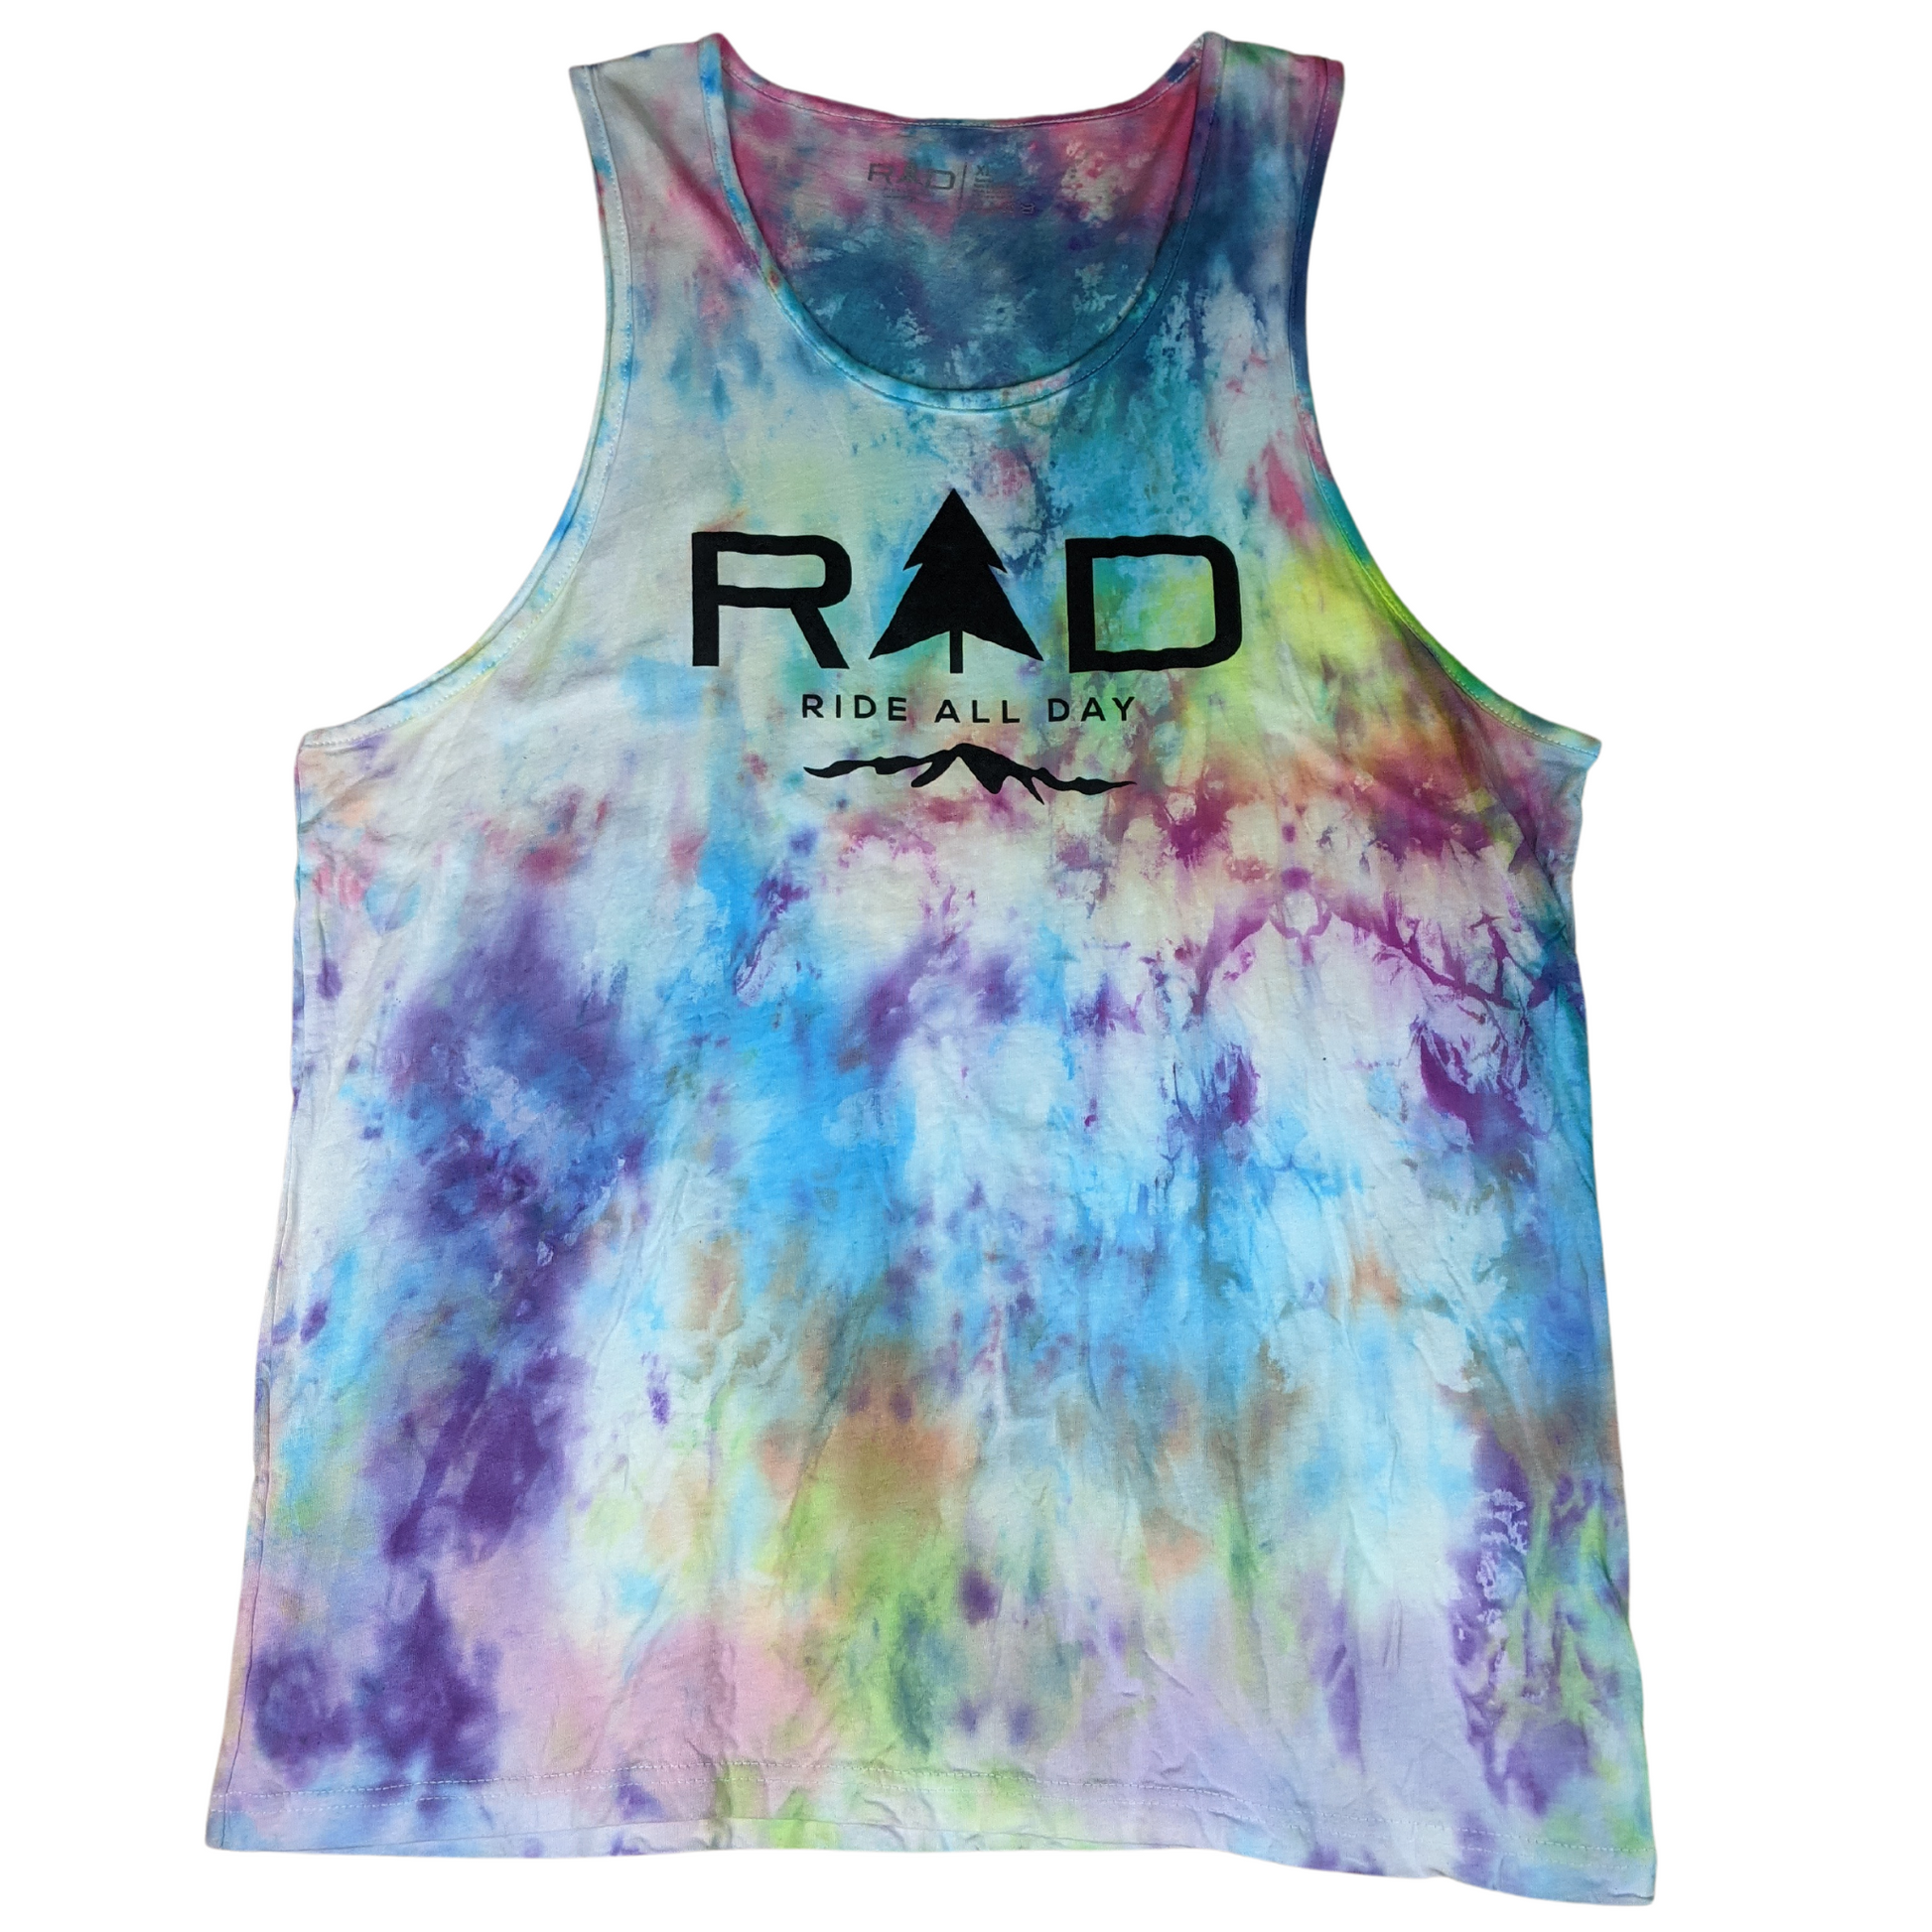 RAD mens tank top in oil slick tie-dye pattern